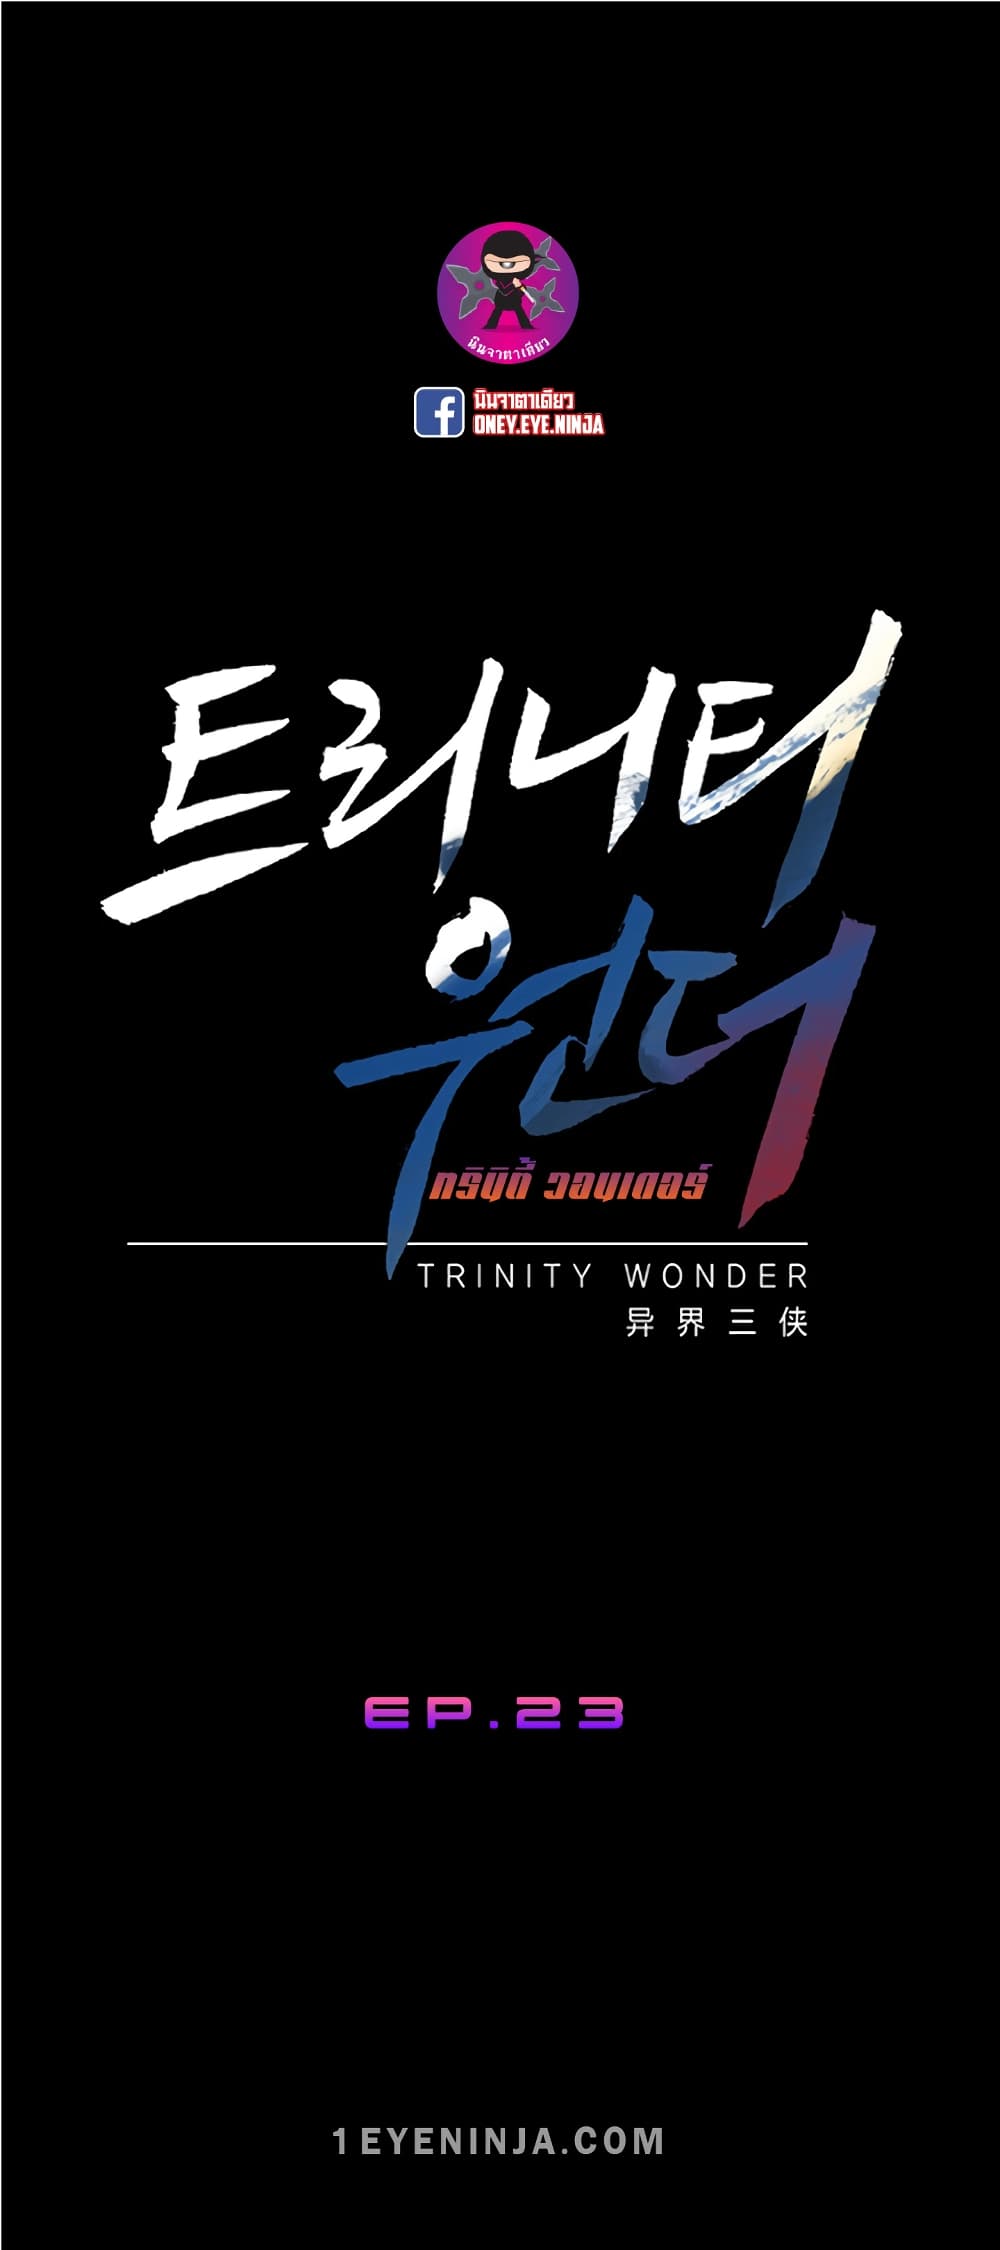 Trinity Wonder 23 (2)